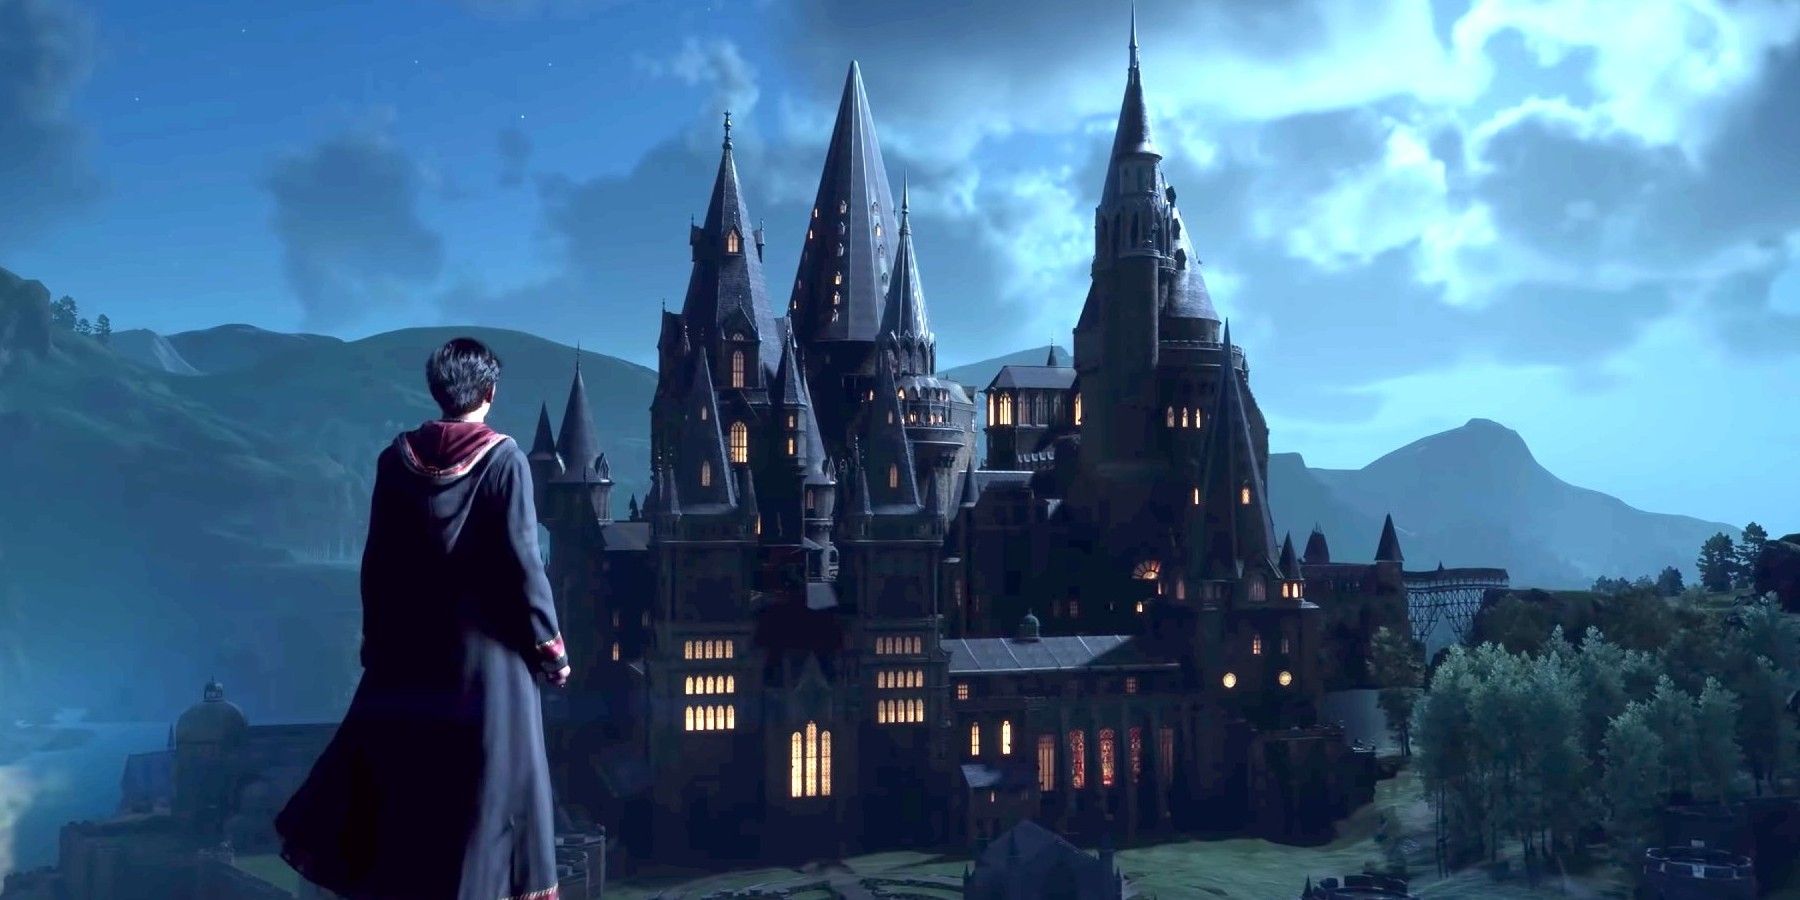 hogwarts legacy castle